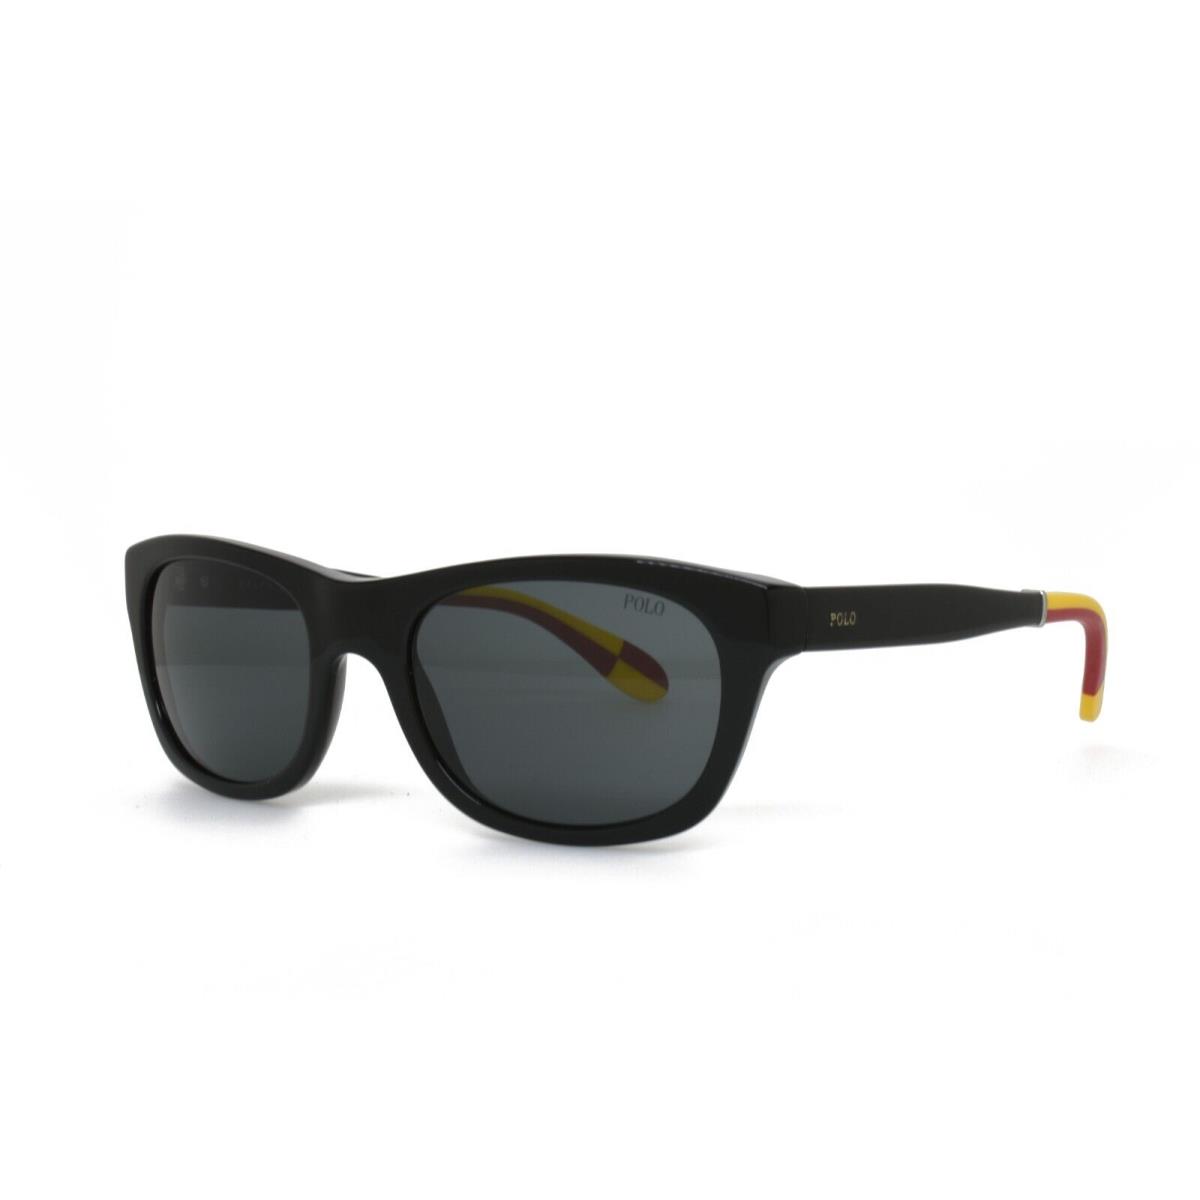 Polo Ralph Lauren 4077 5001 87 54-20-140 Black Sunglasses